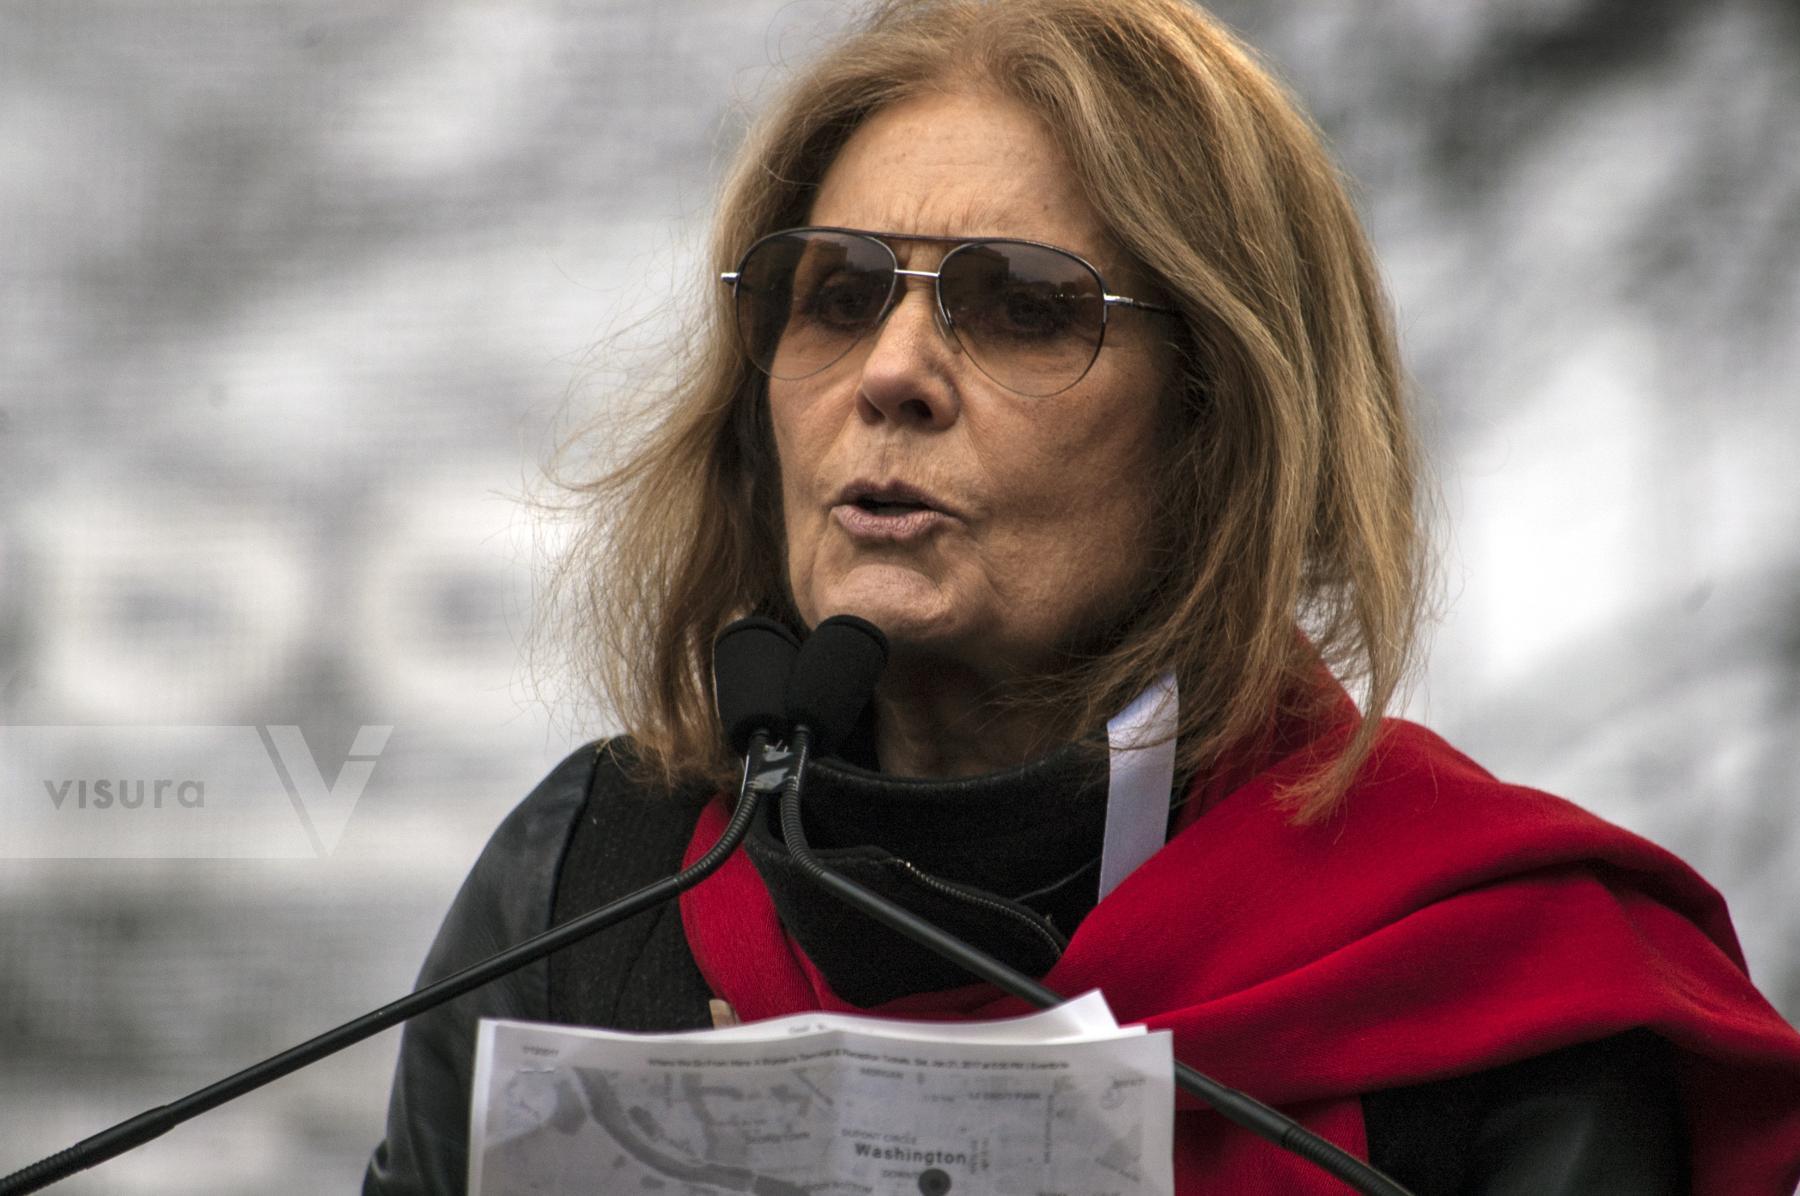 Purchase Gloria Steinem Fighting For Women by Tish Lampert